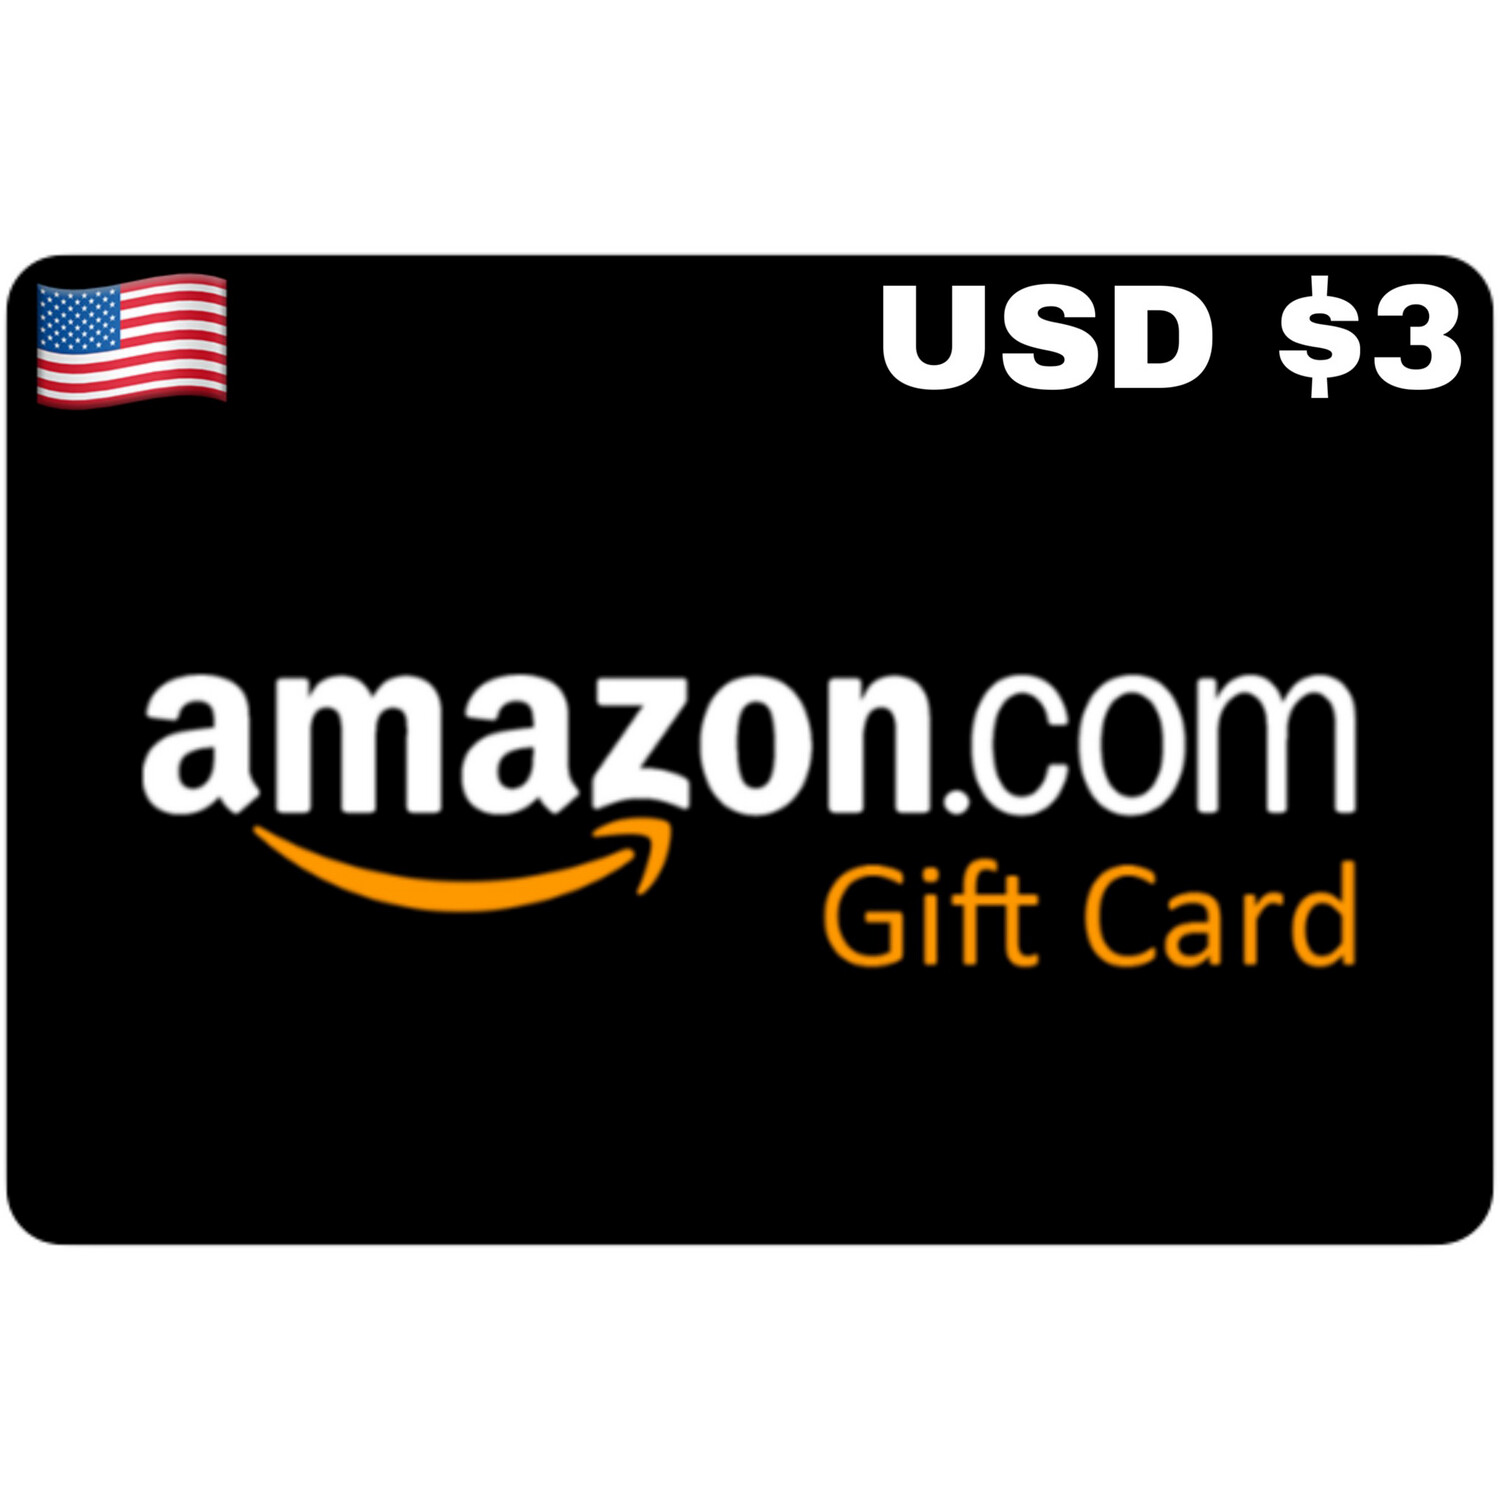 Amazon.com Gift Card USD $3